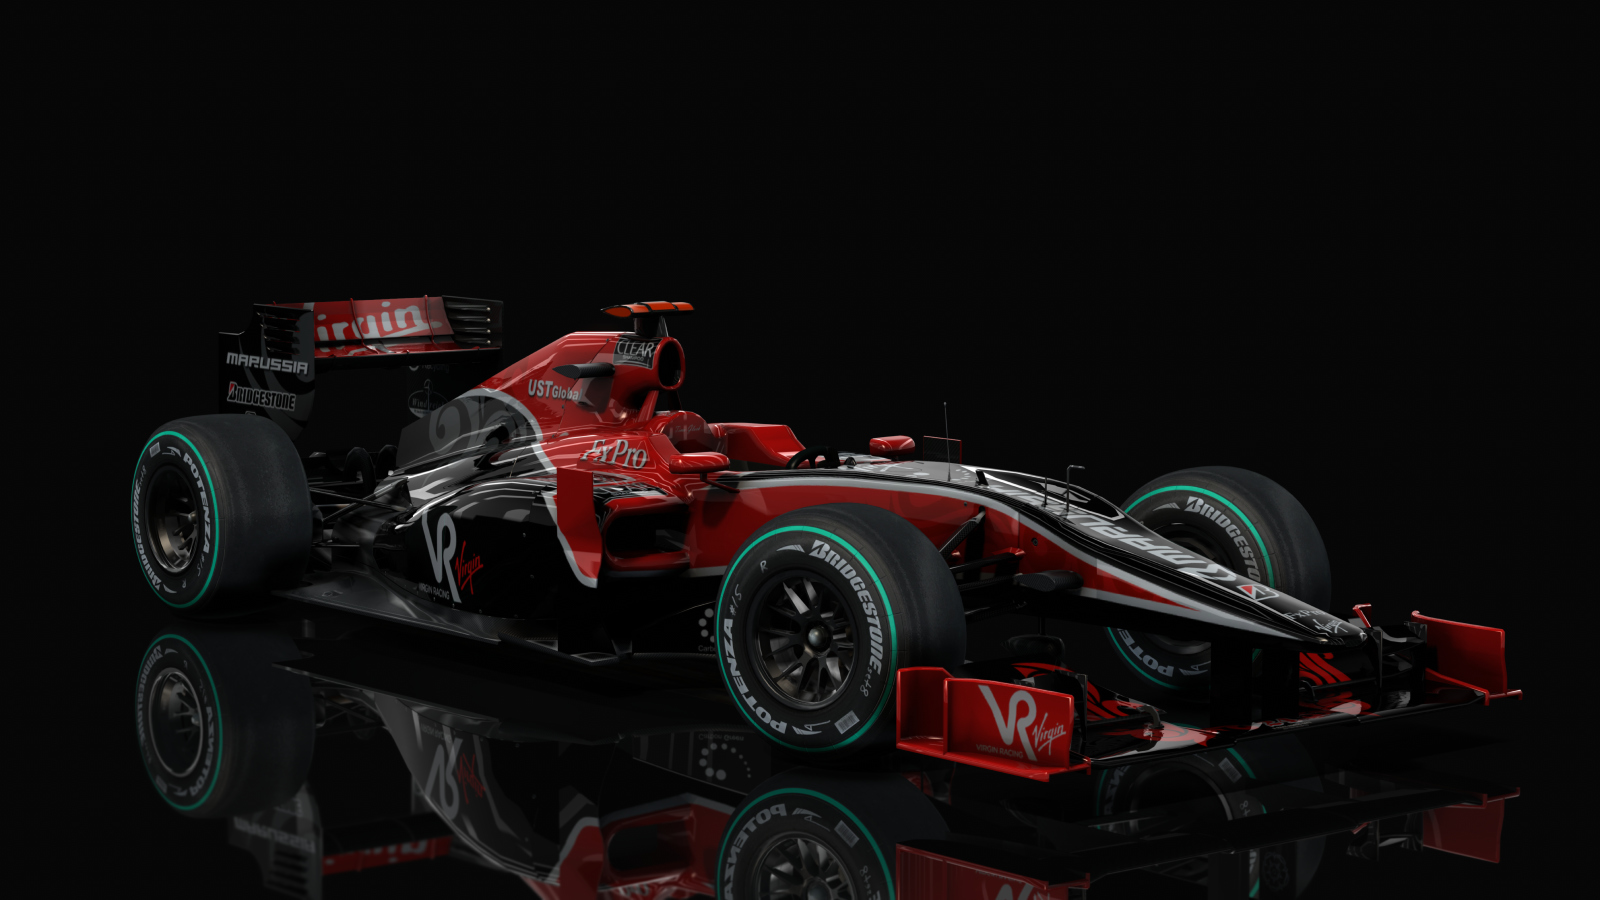 F1 2010 - Virgin VR-01 Preview Image